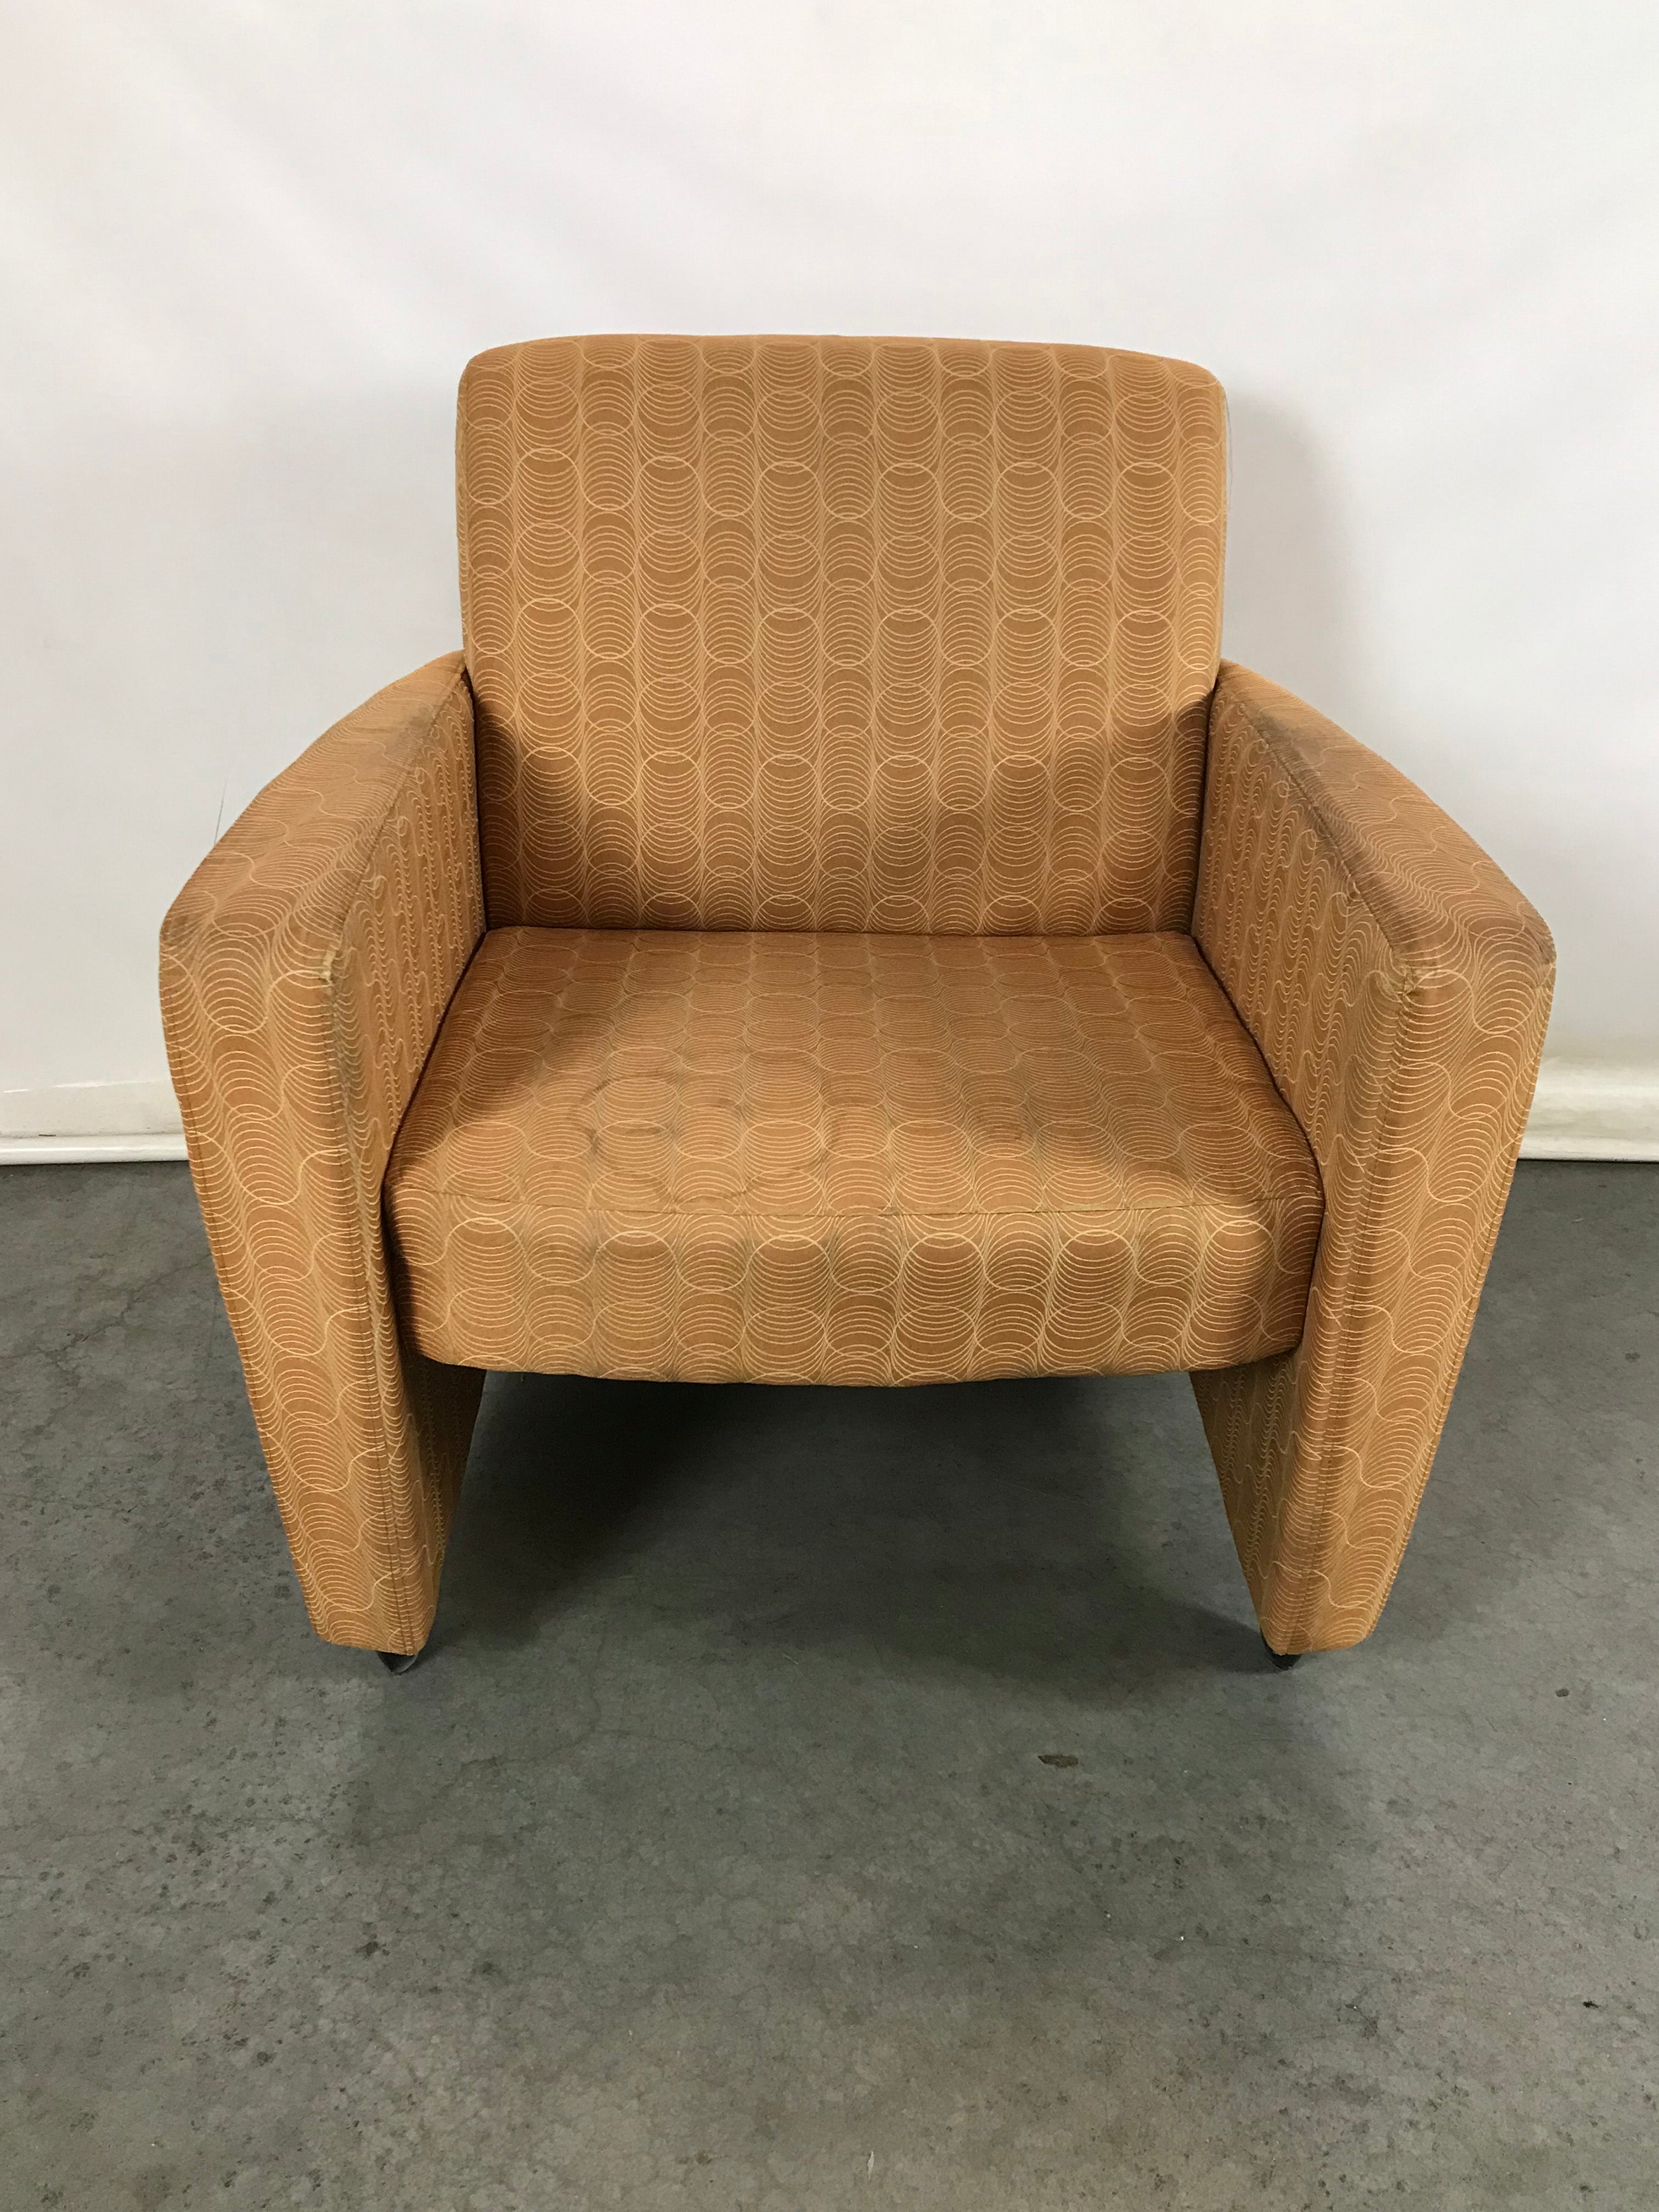 Haworth Orange Patterned Arm Chair